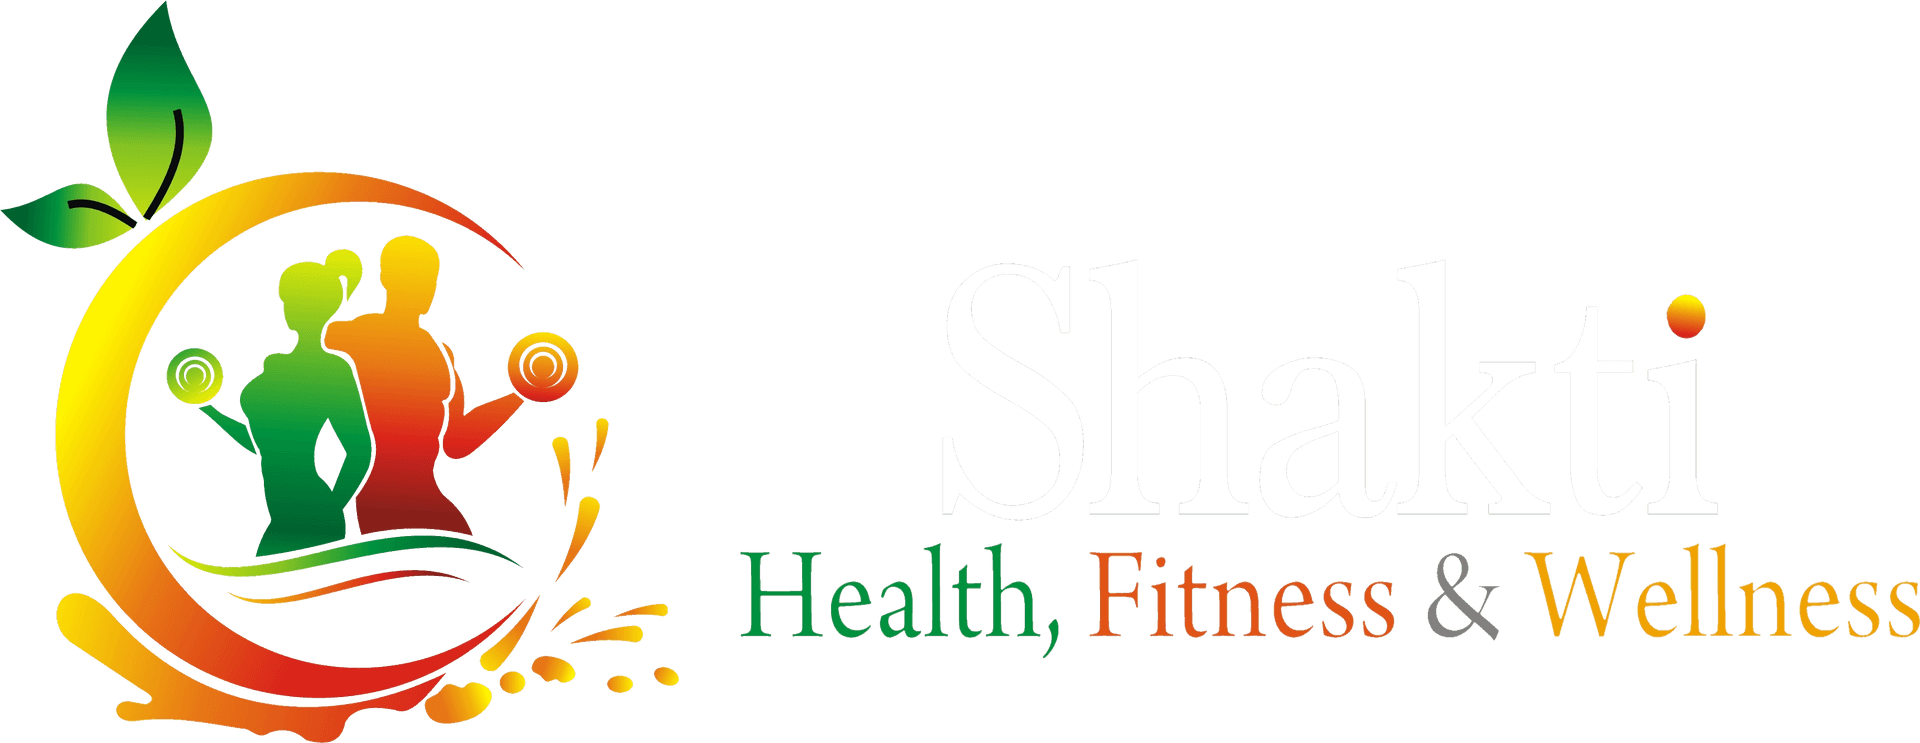 Shakti Health Fitness Wellness Logo PNG image